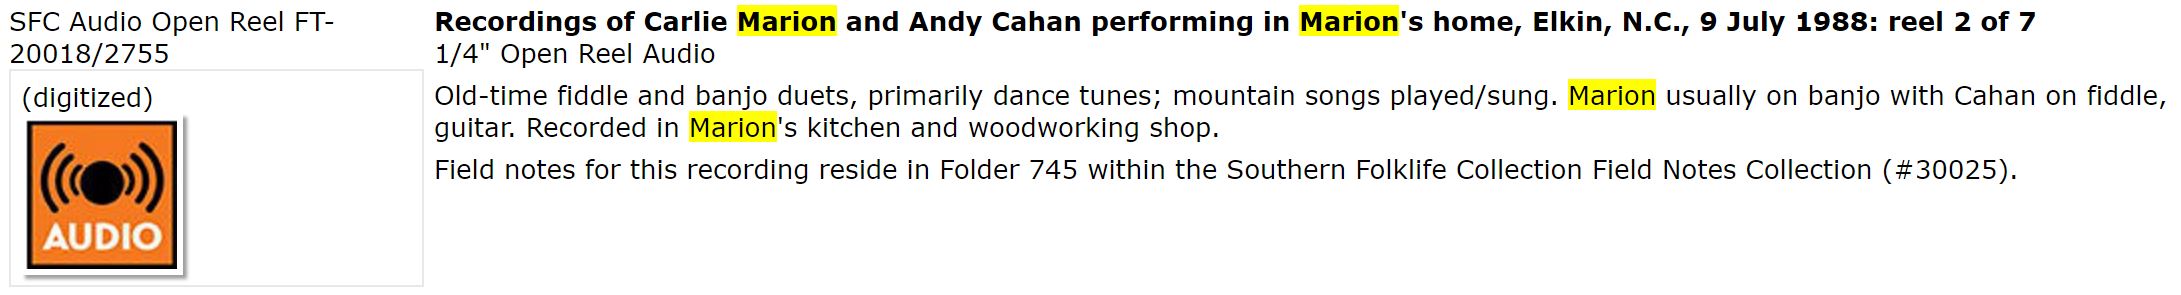 ft20018_2755_scrnsht_Recordings of Carlie Marion and Andy Cahan performing in Marion's home, Elkin, N.C., 9 July 1988: reel 2 of 7 1/4" Open Reel Audio